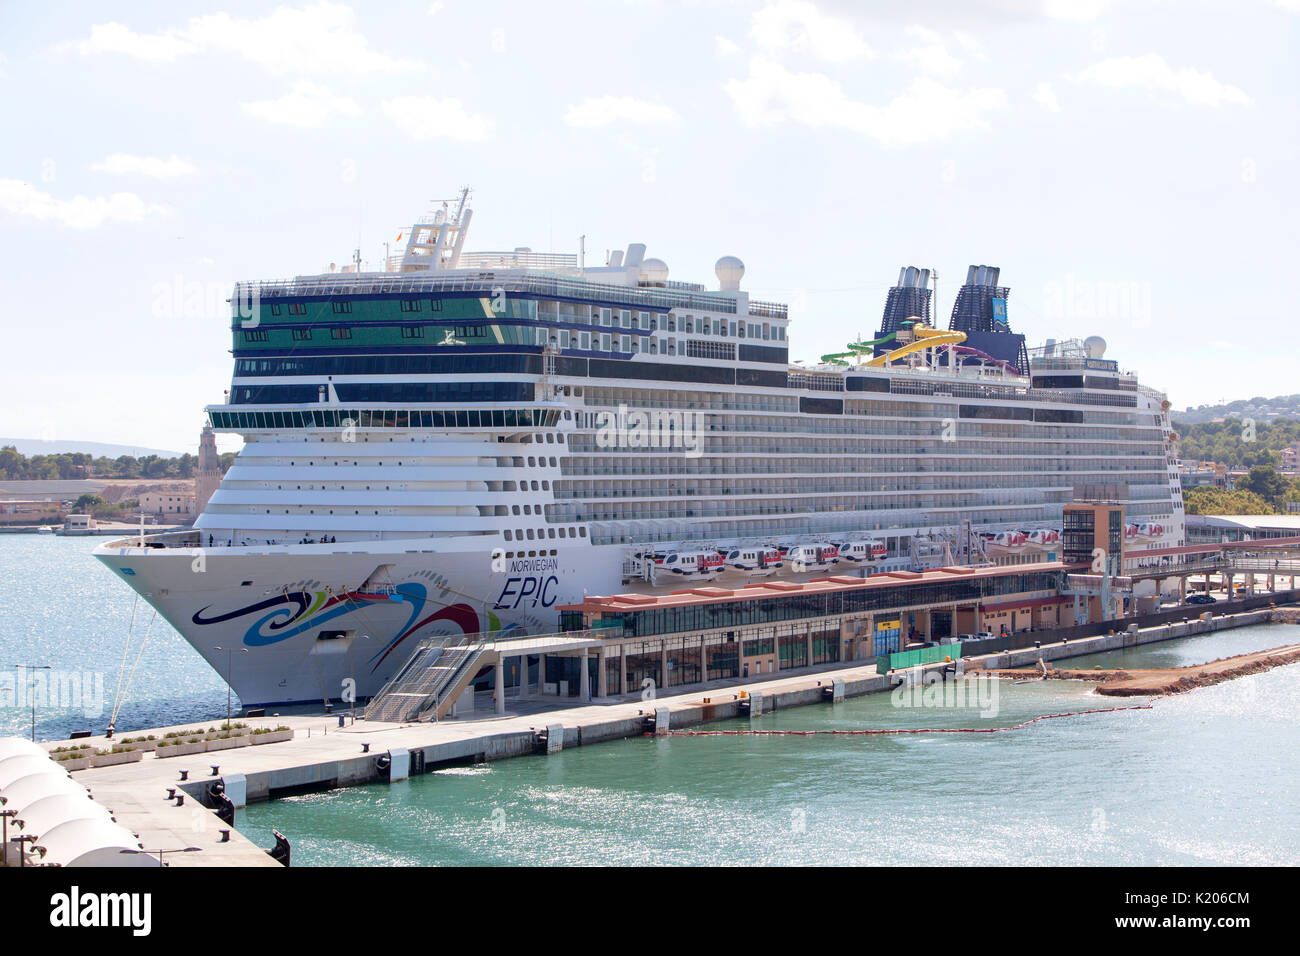 Norwegian Epic cruise ship of the Norwegian Cruise Line docked at Palma de Mallorca, Spain, Western Europe during summer Stock Photo